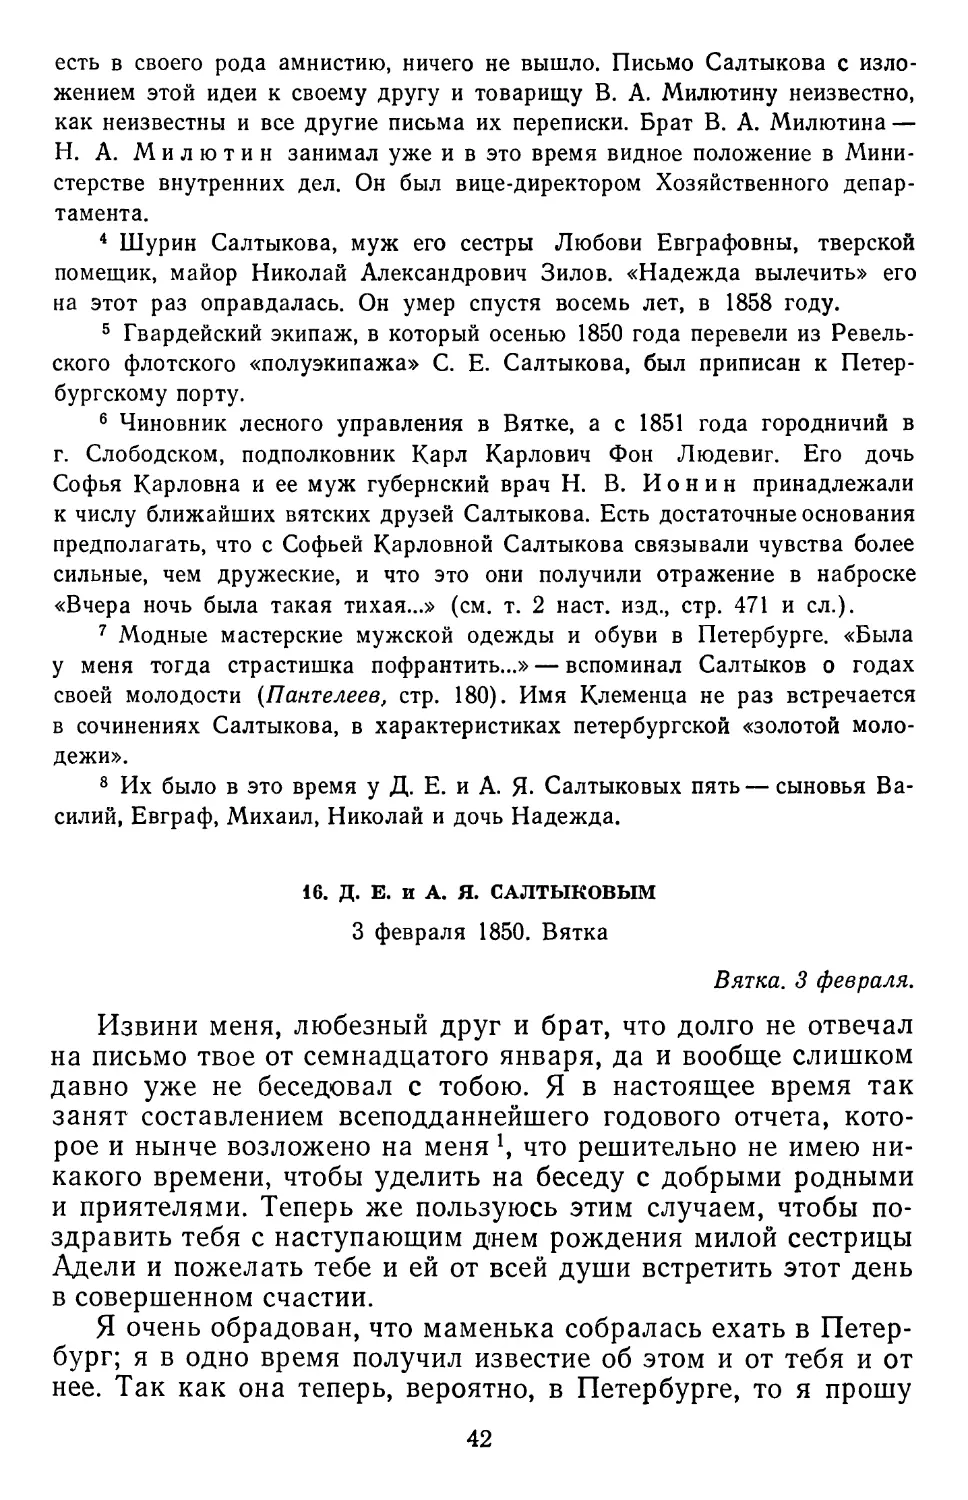 16.Д.Е. и А. Я. Салтыковым..3 февраля 1850.Вятка